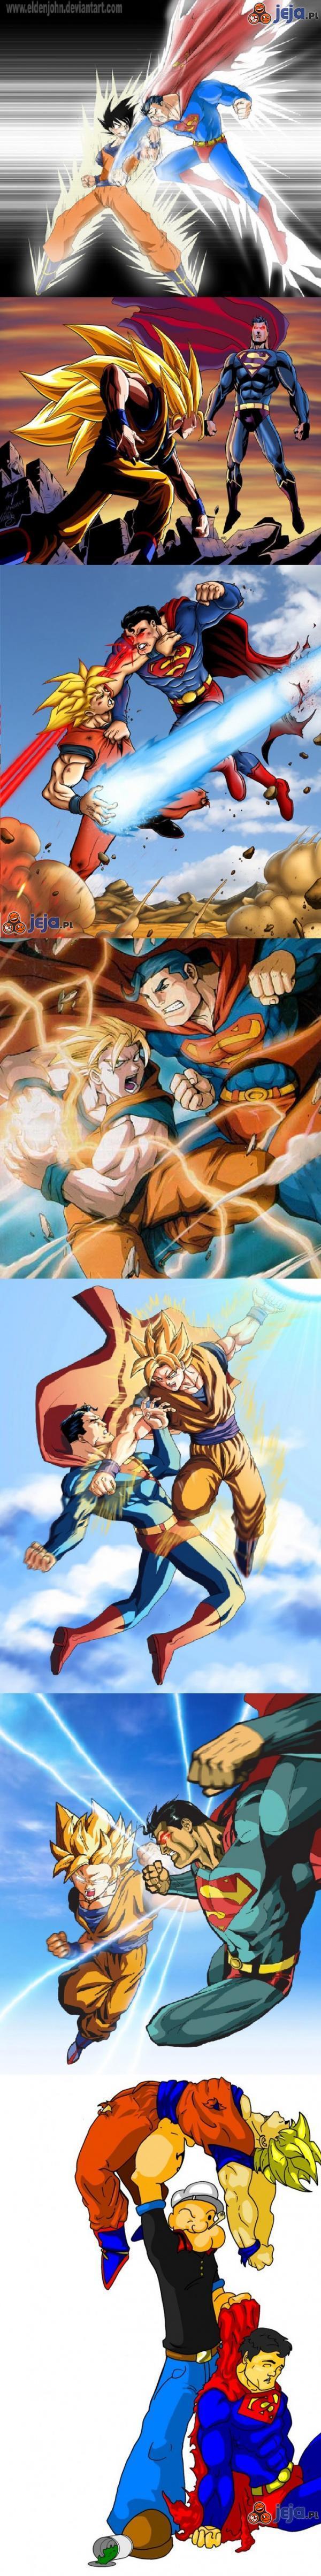 Superman vs Goku - kto wygra?